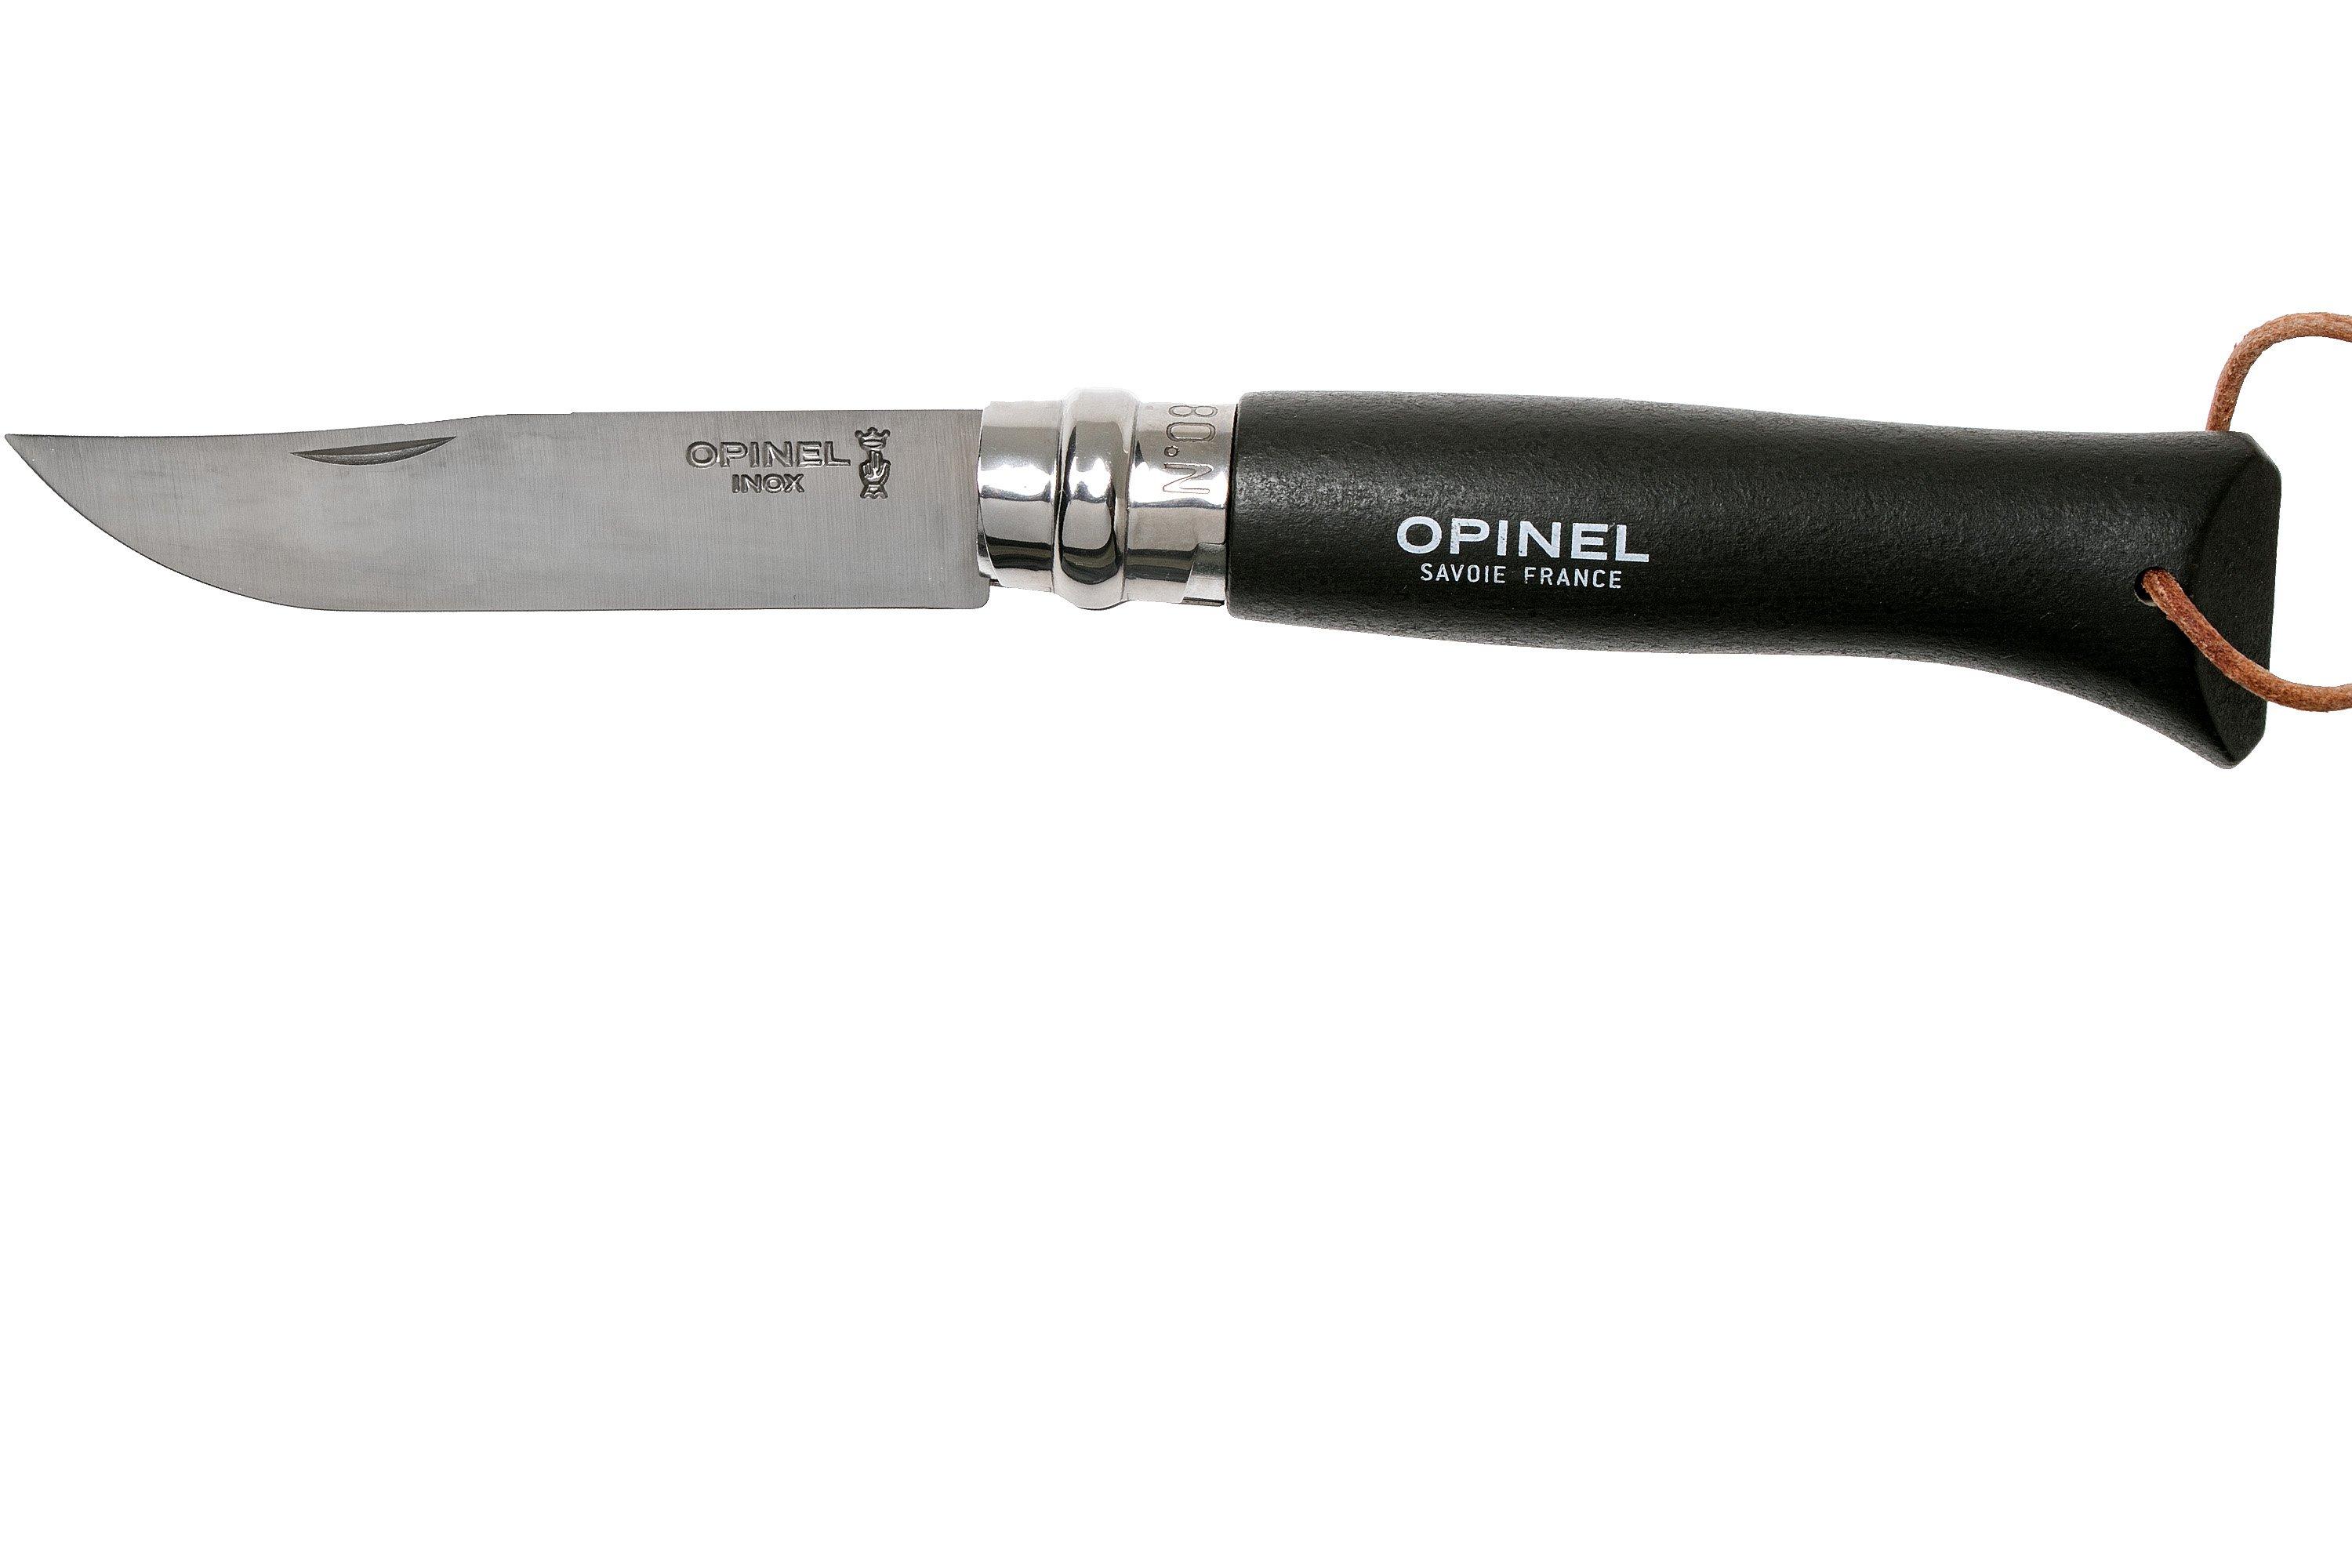 Couteau Opinel 8,5 Cm Baroudeur Noir Brun - 002211 - OPINEL